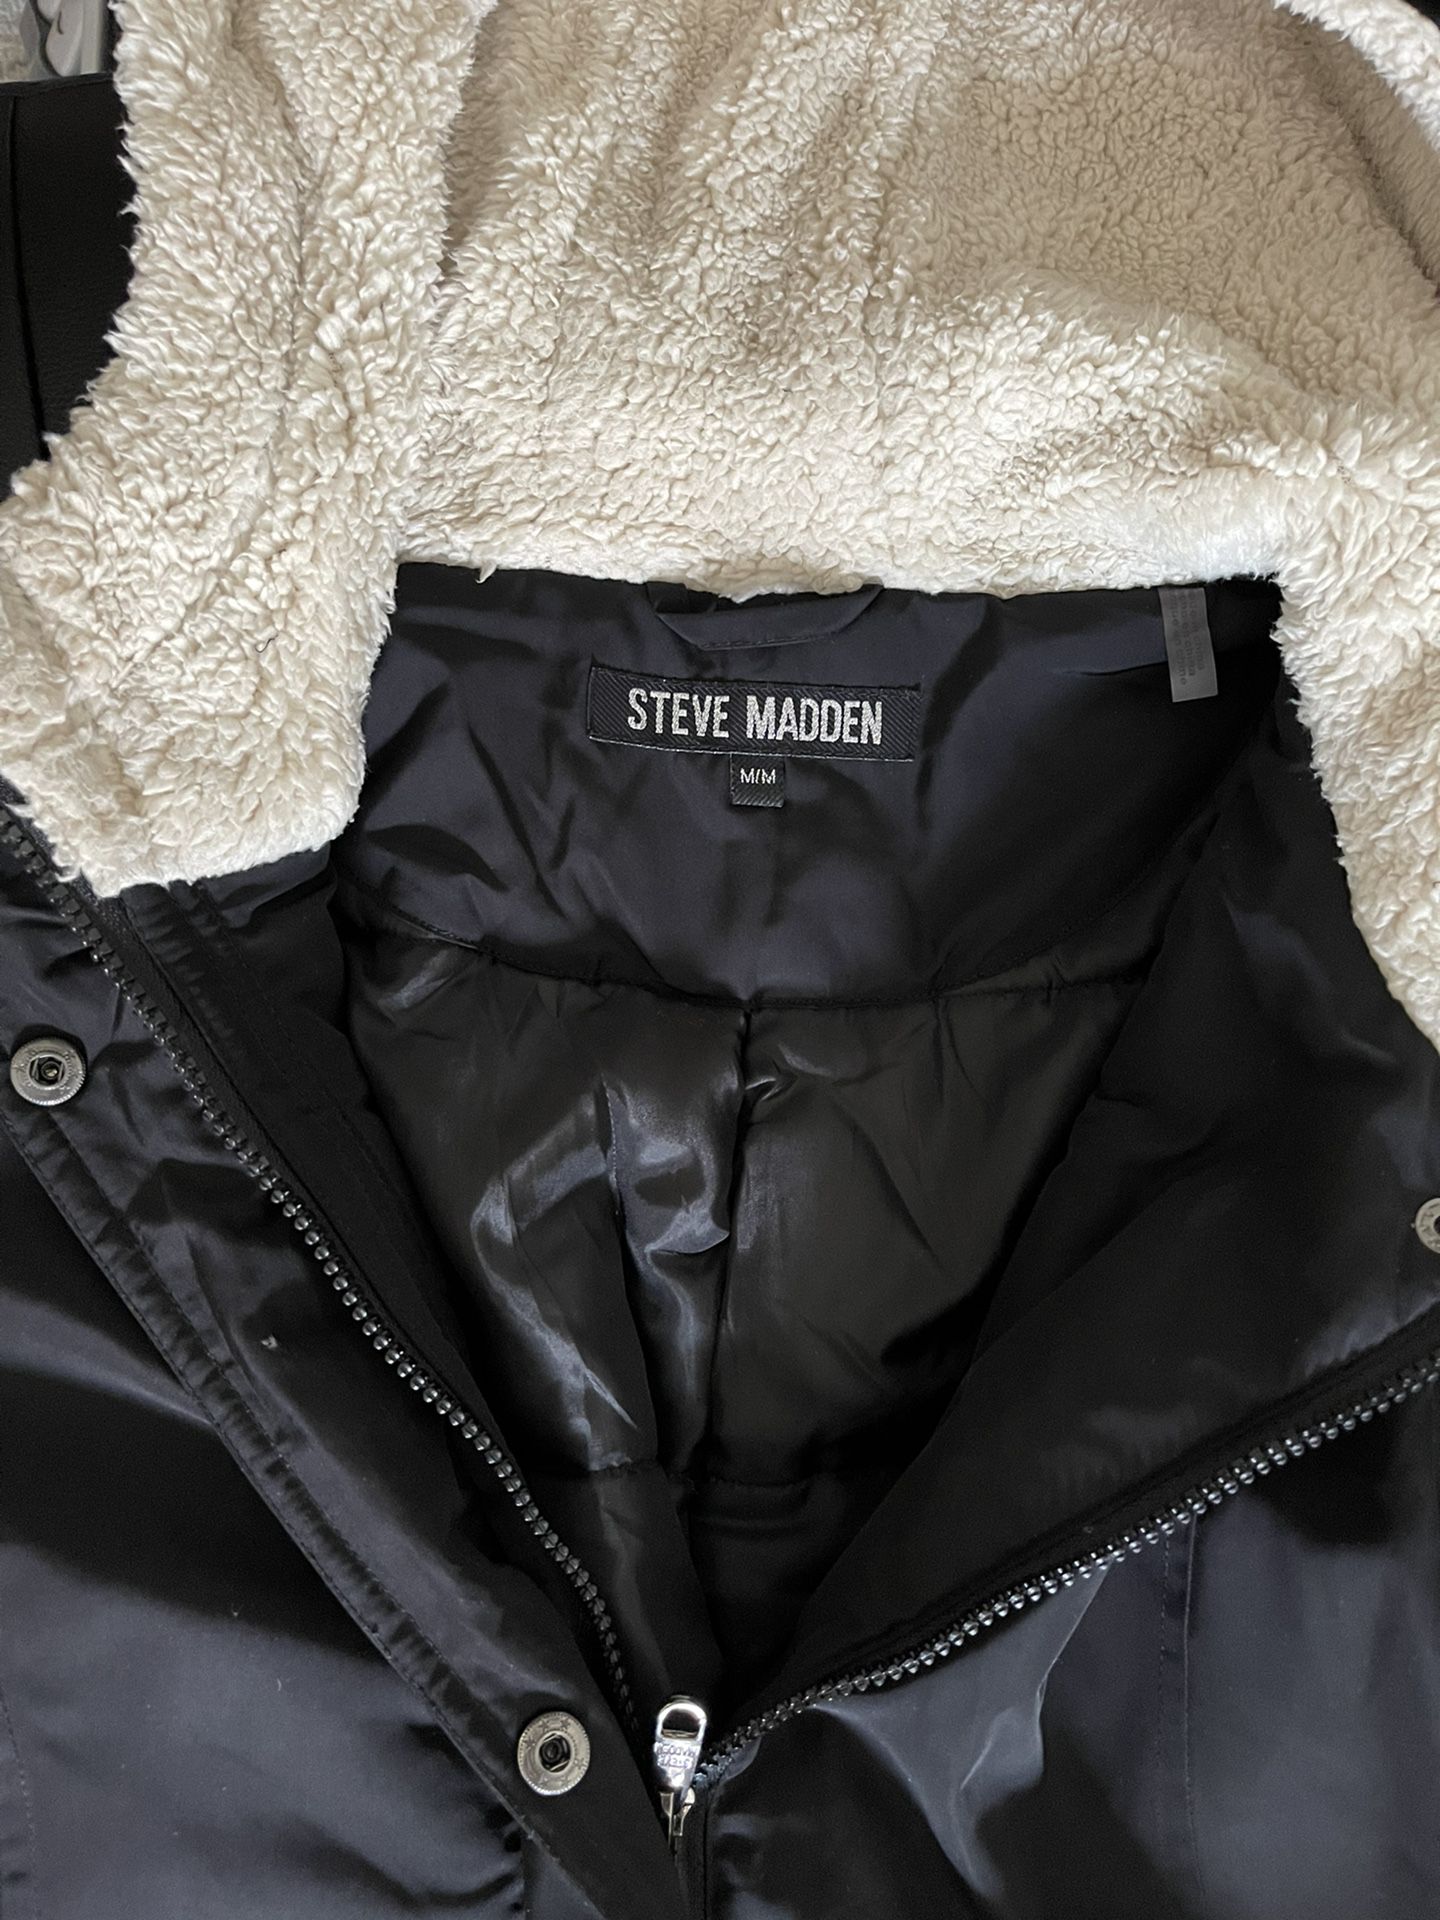 “M” size Steve Madden Jacket (brand new)